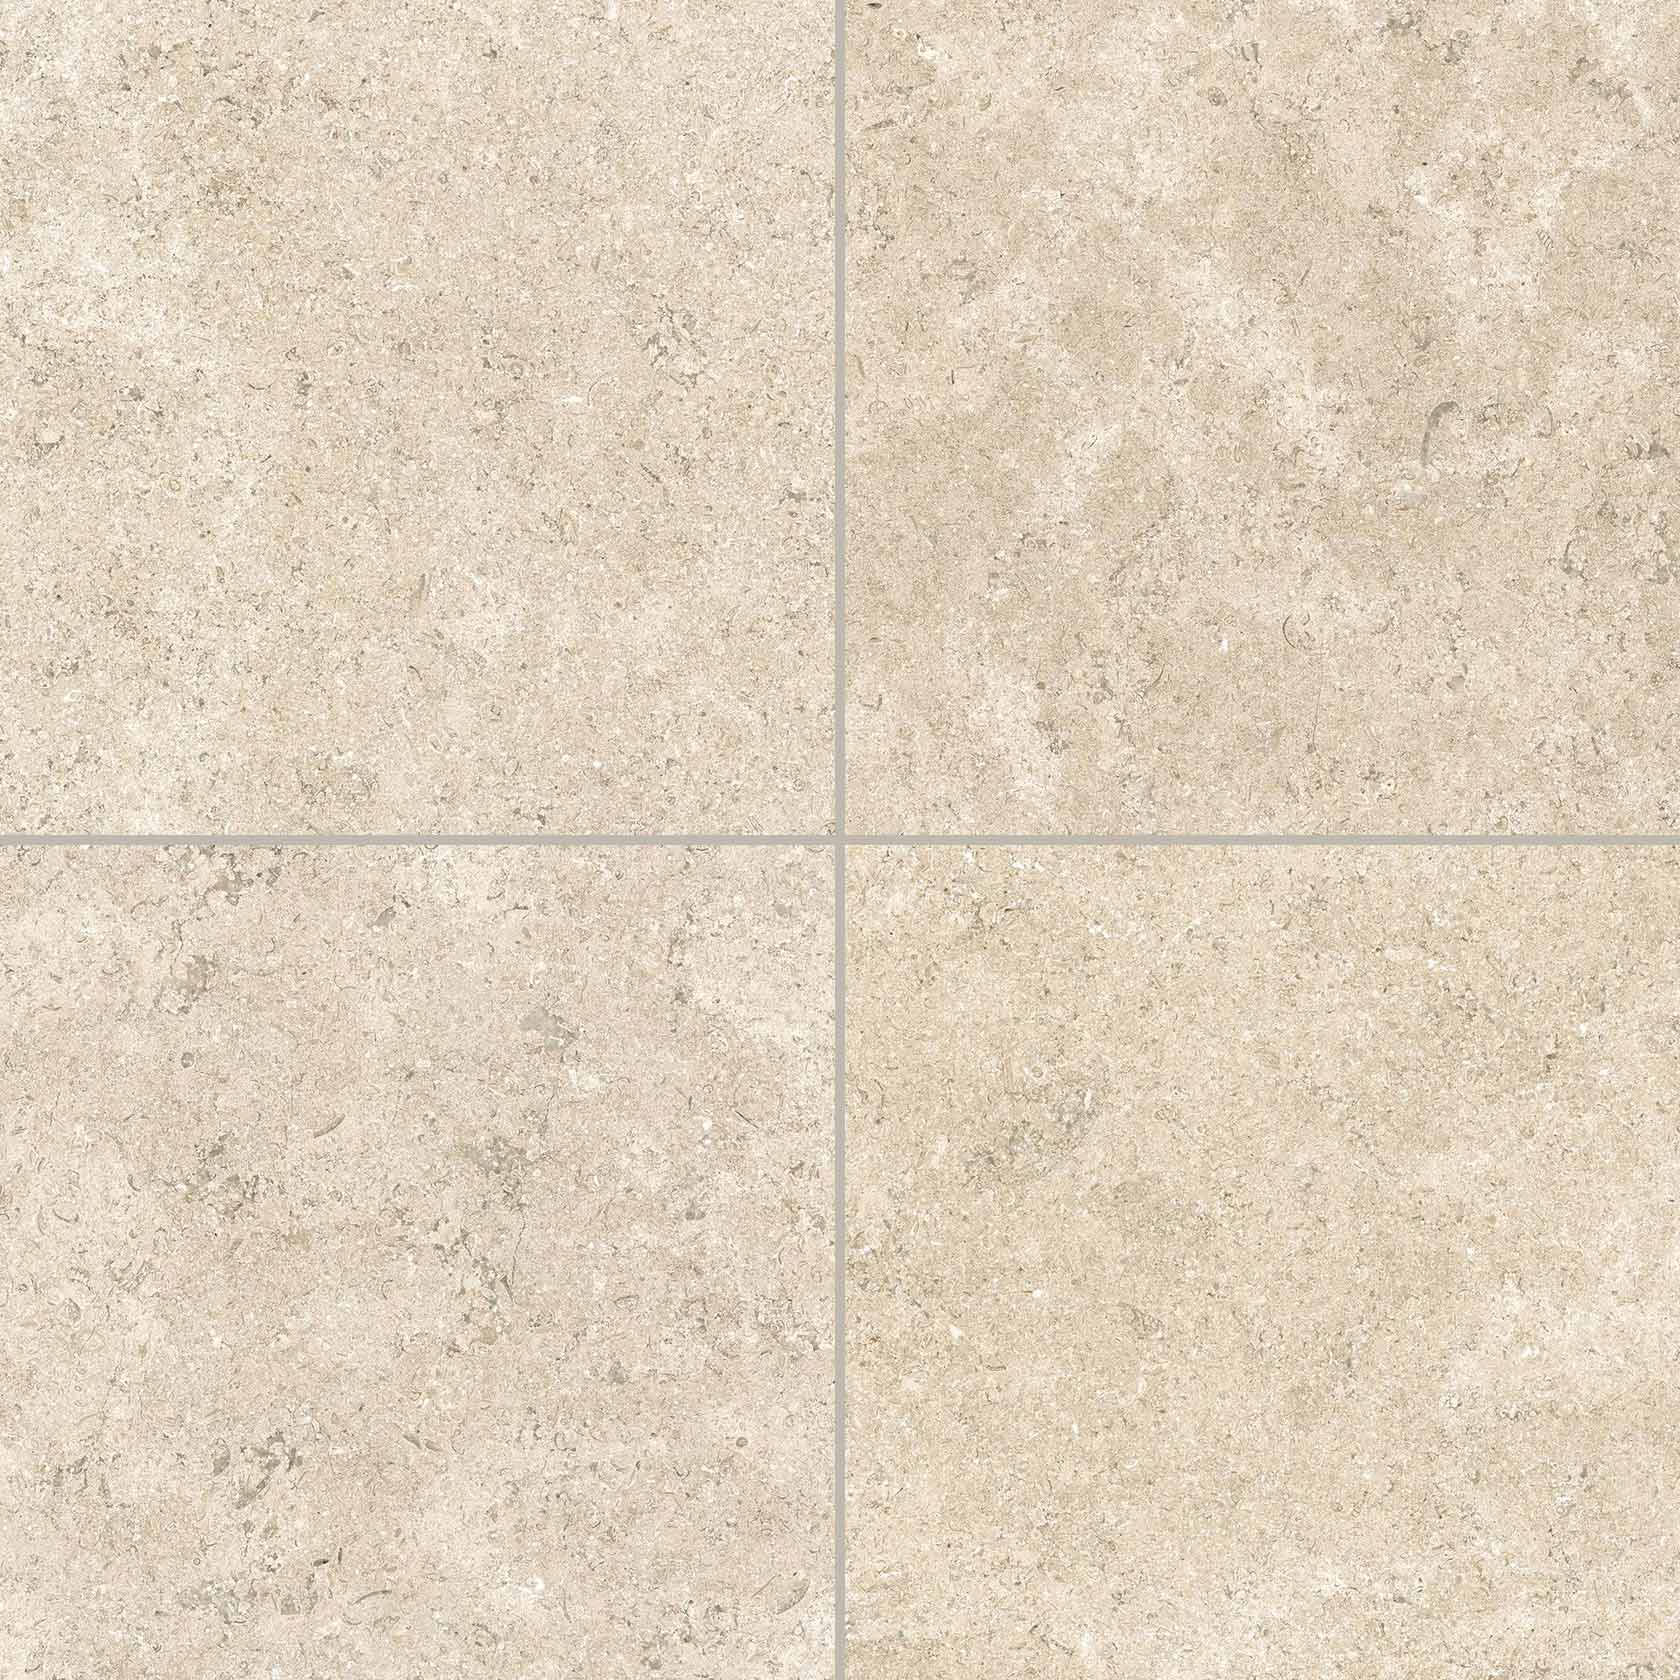 Dune Limestone 4 tiles in grid